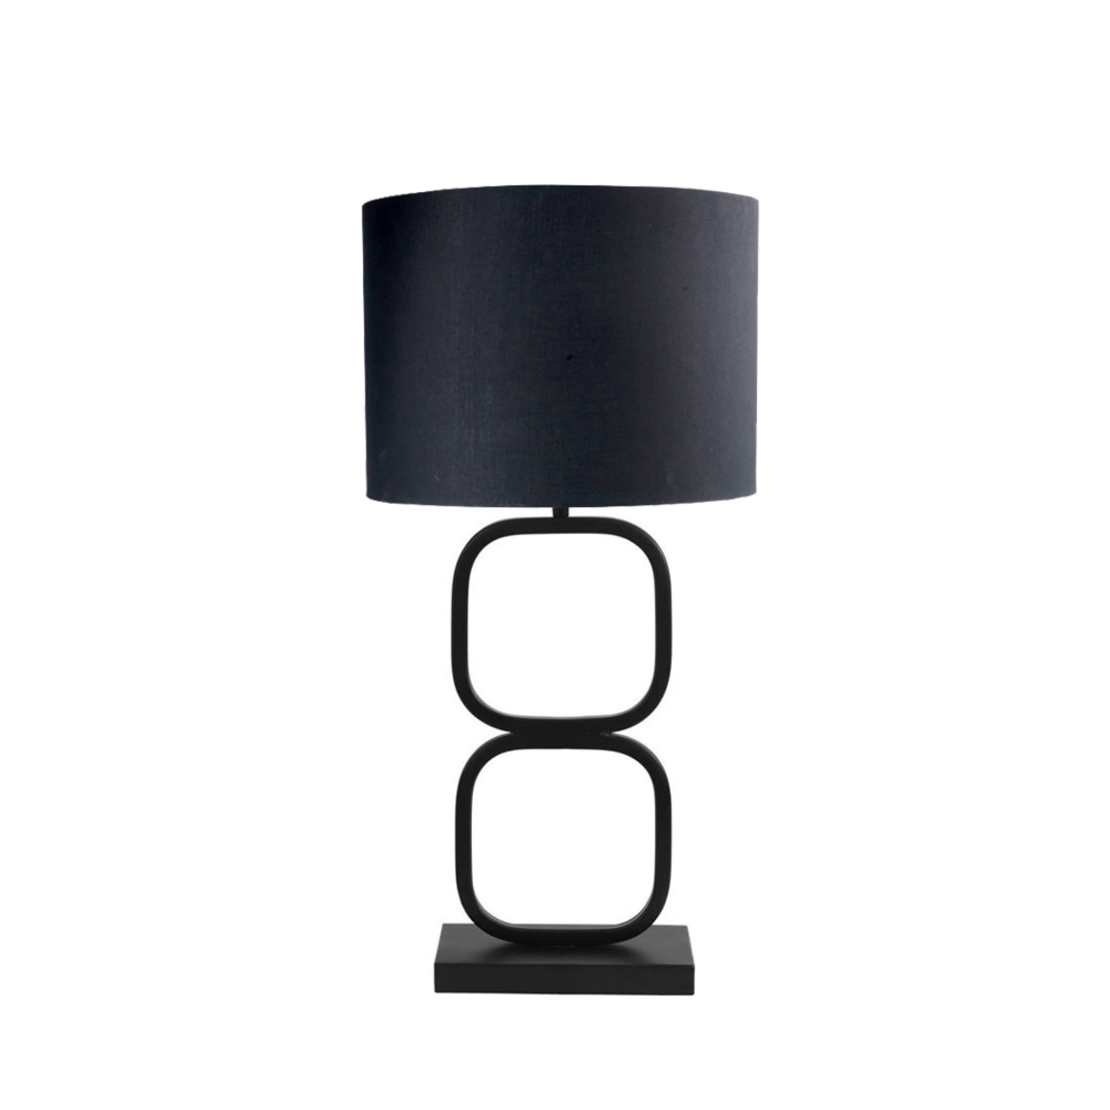 NEW ITEM 8 LAMP TABLE IRON BLACK MATTE BLACK CE IN